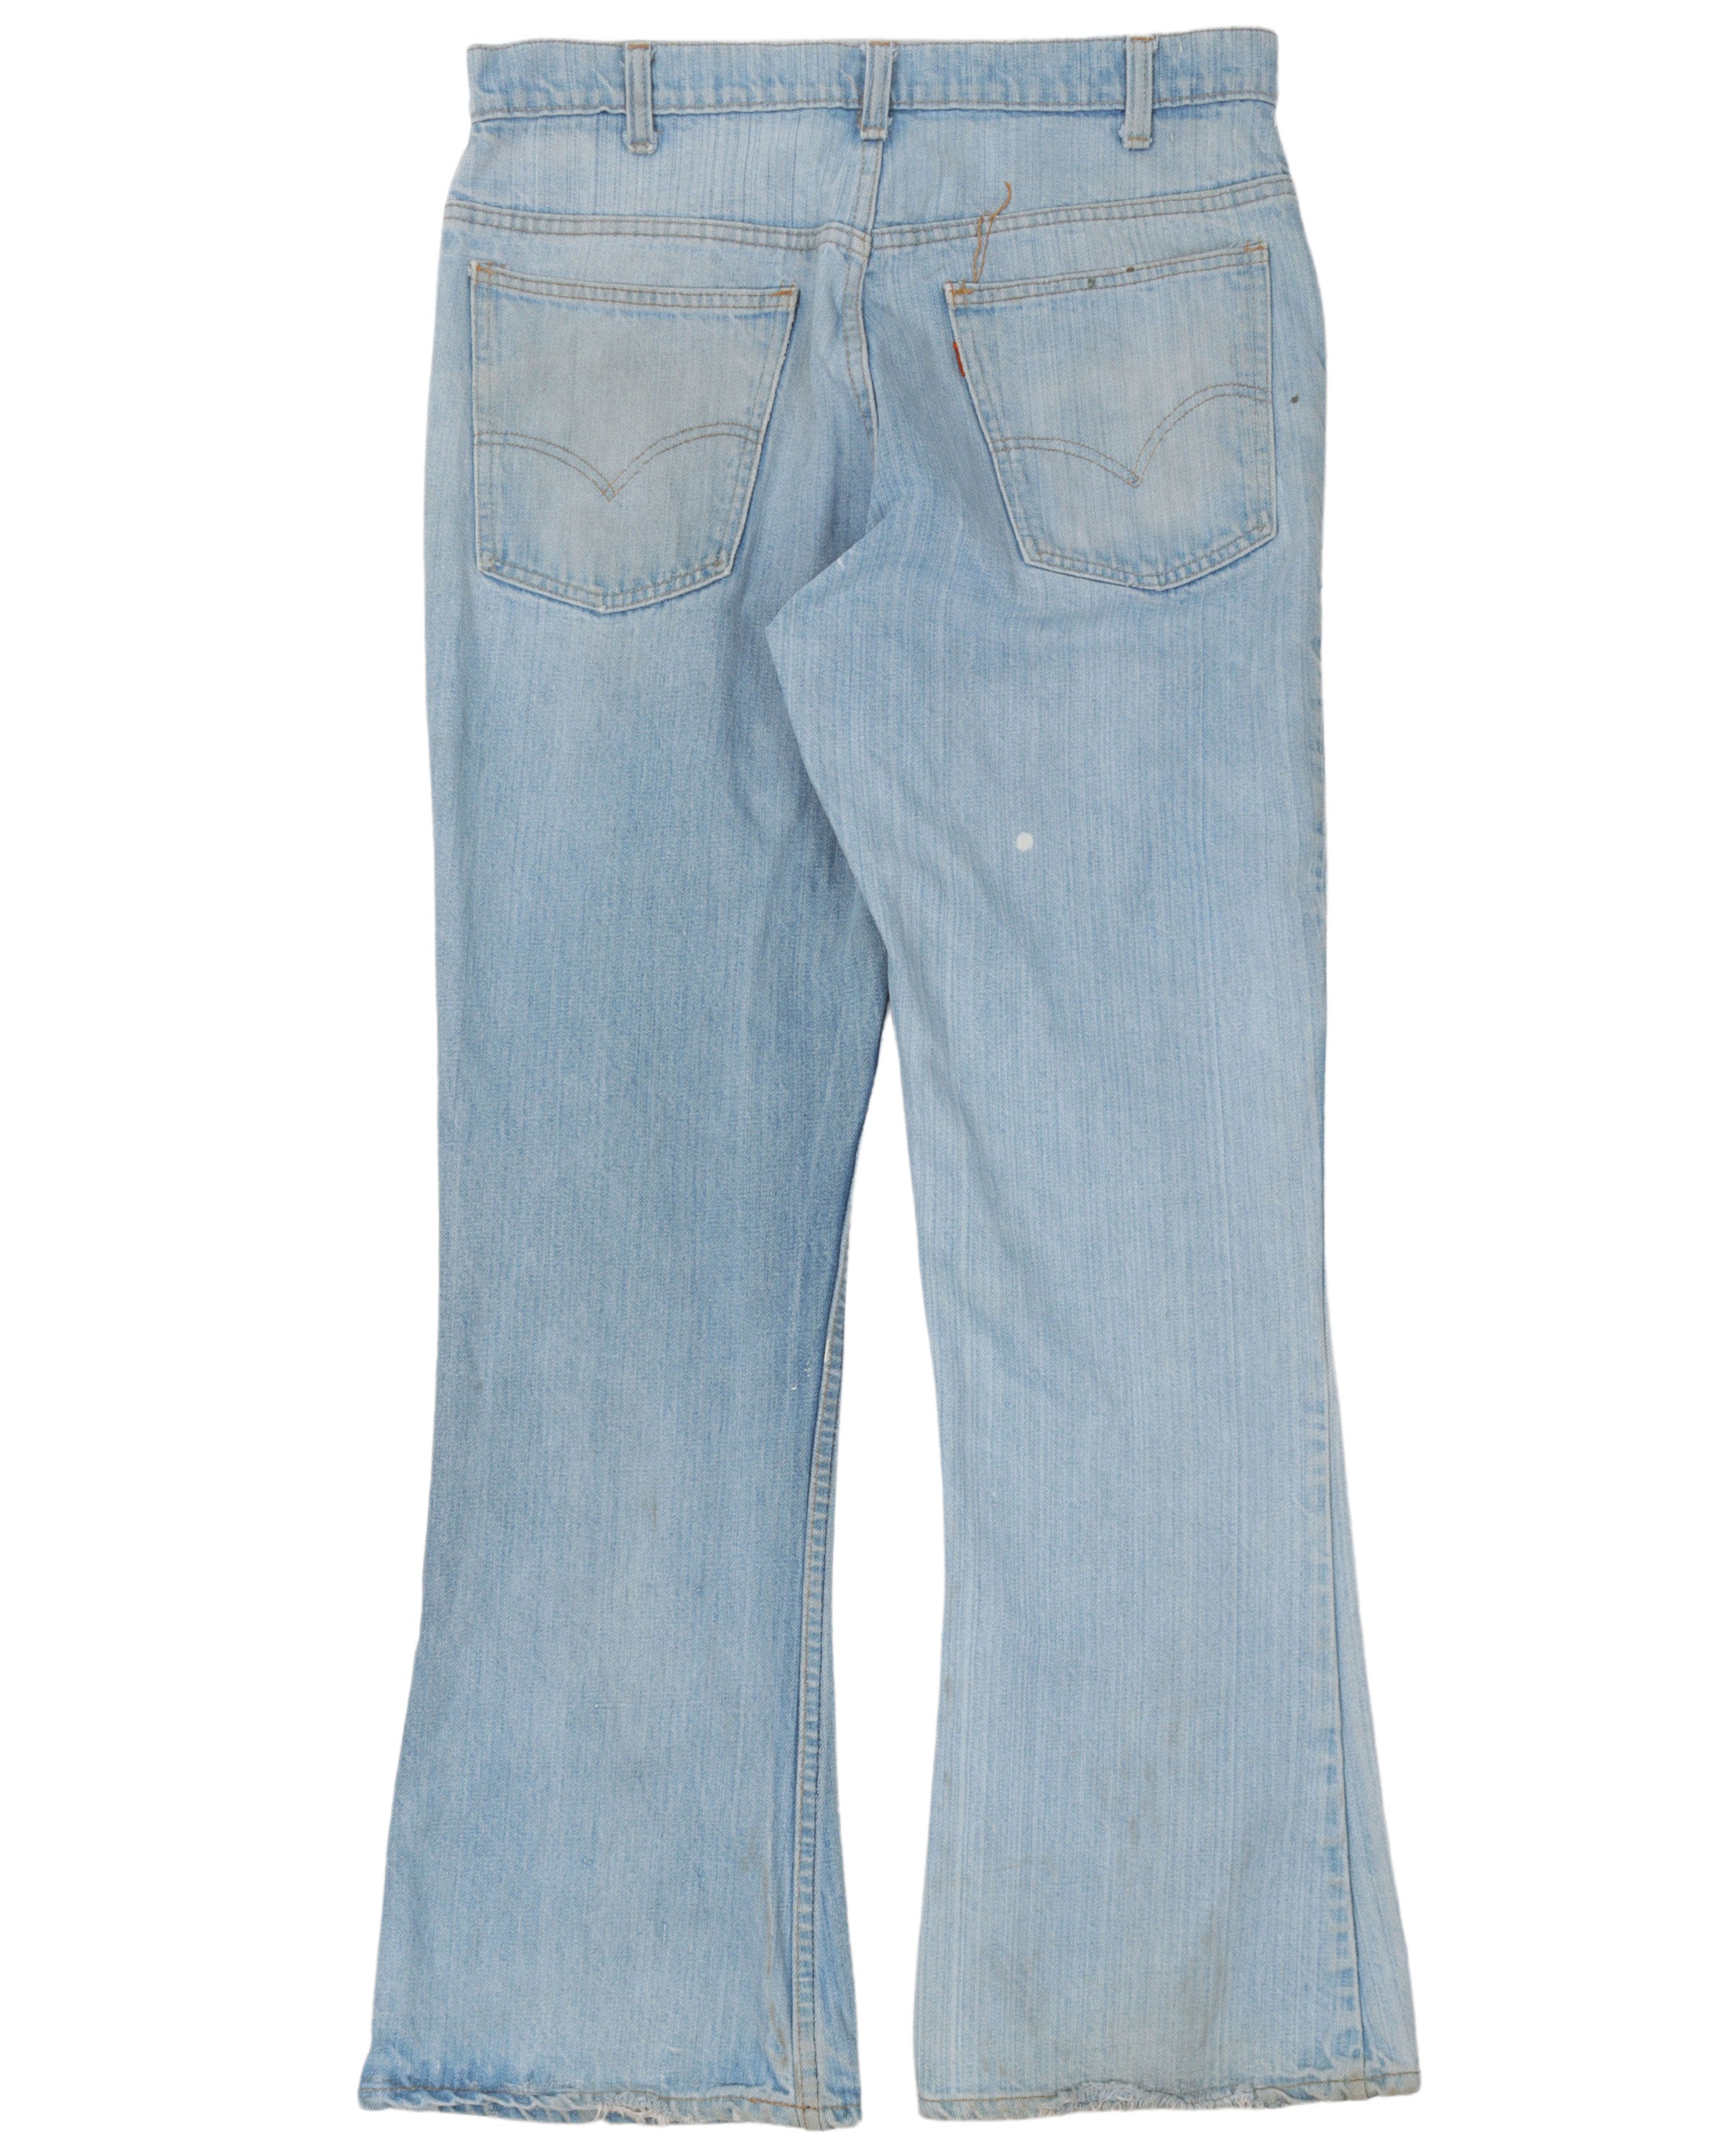 Levi's Flared Bell-Bottom Jeans